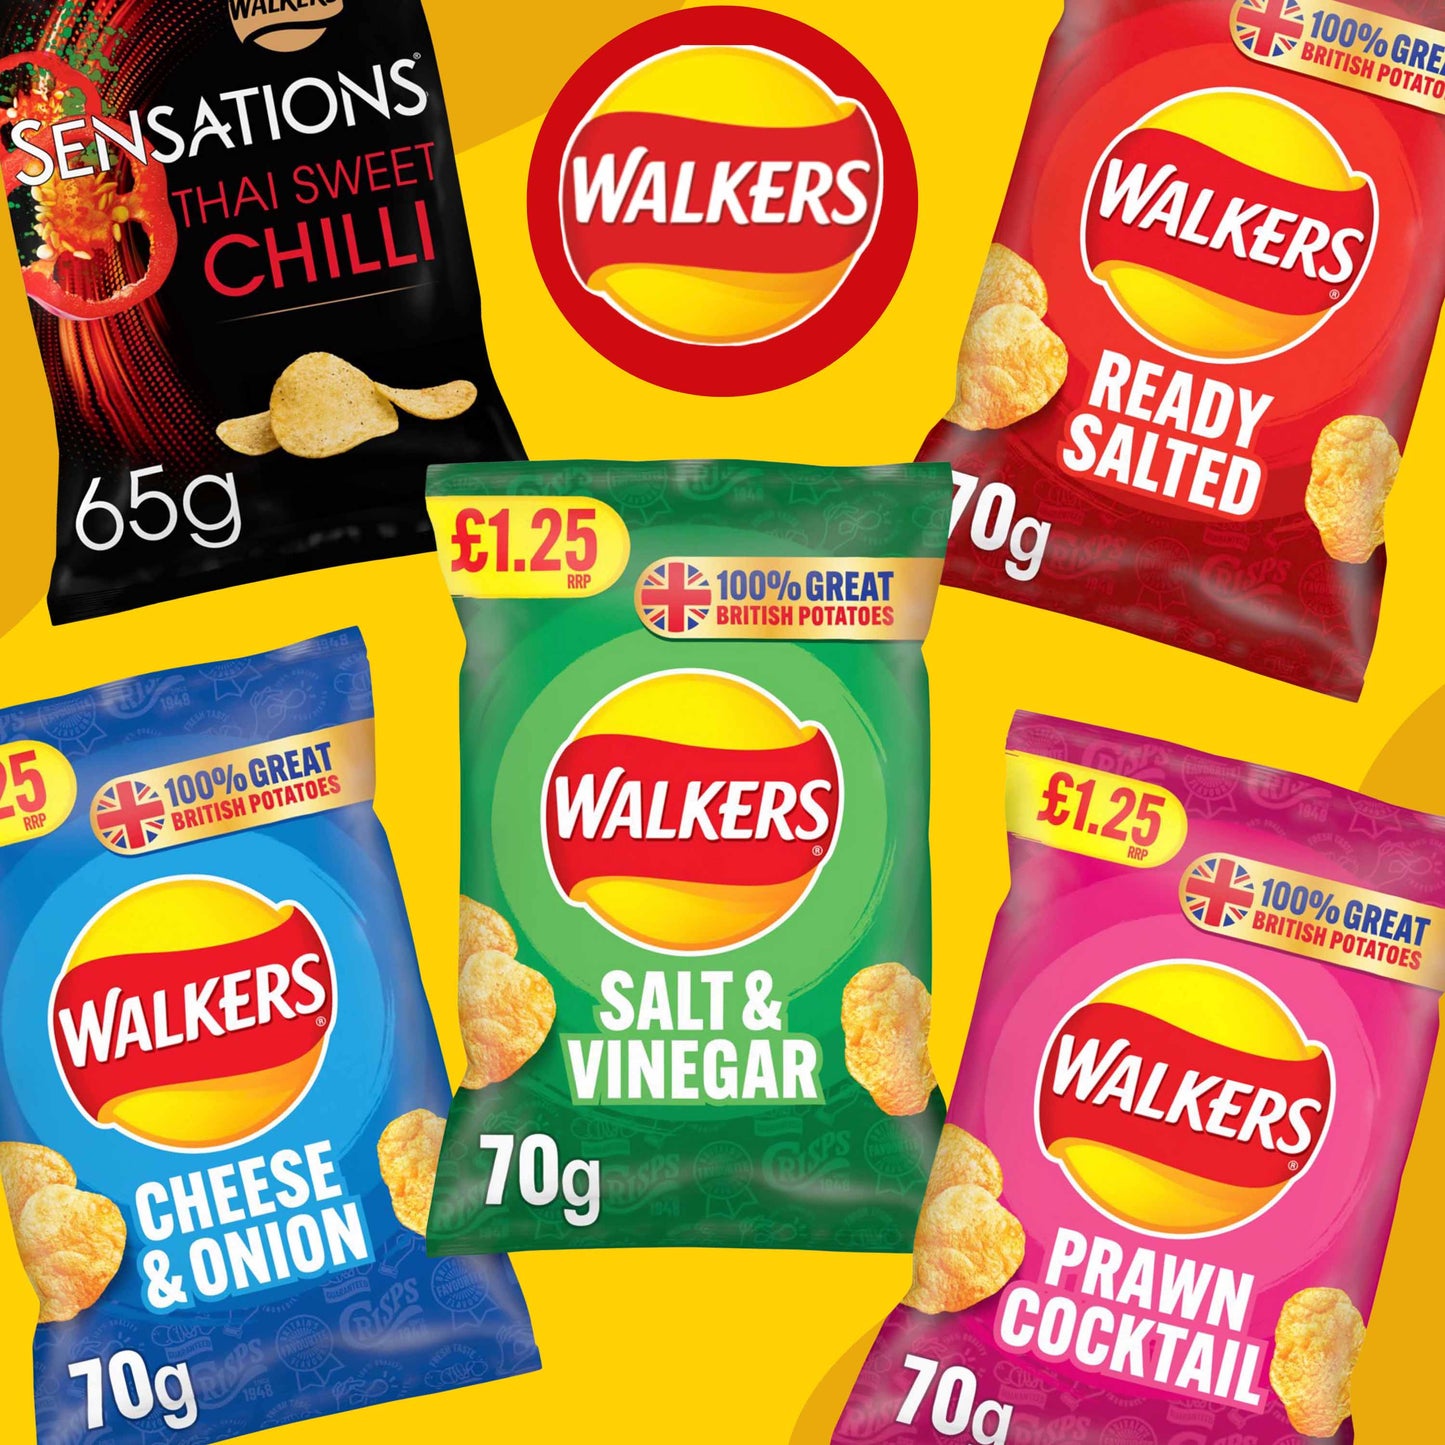 Walkers Salt & Vinegar Crisps 70g - (£1.25 Bag) - Classic British Crisps